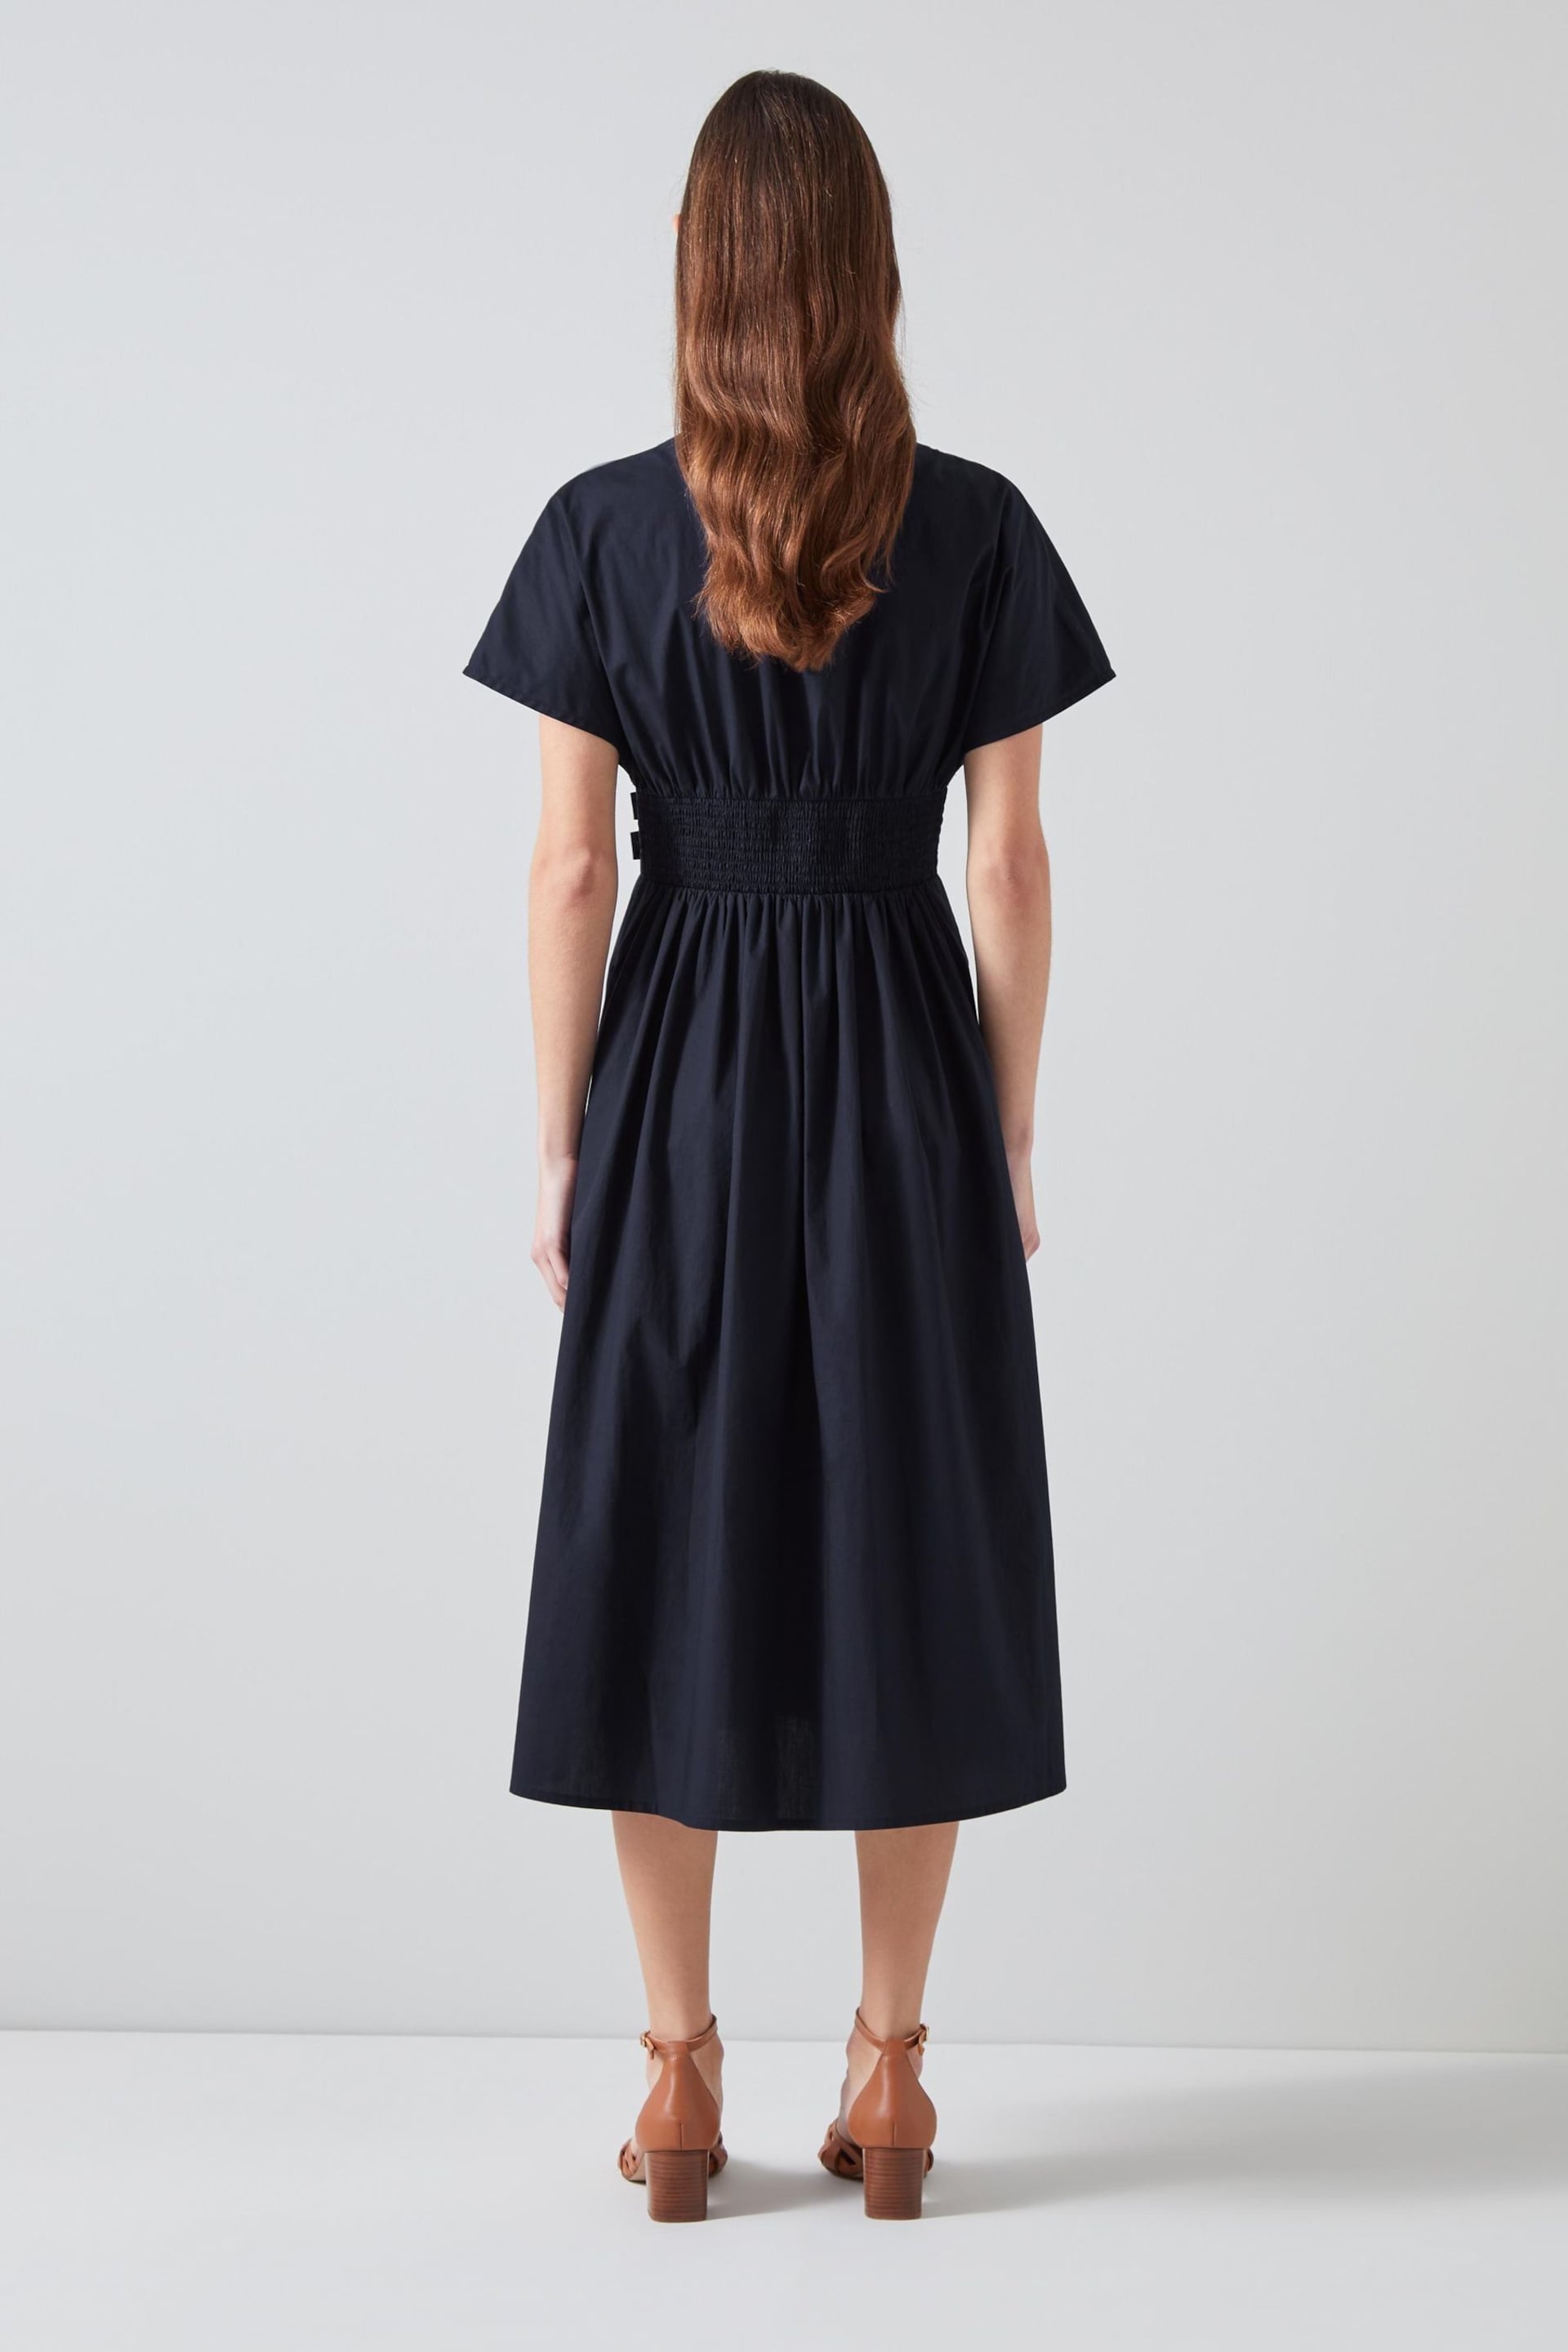 LK Bennett Eva Cotton Sun Dress - Image 2 of 3